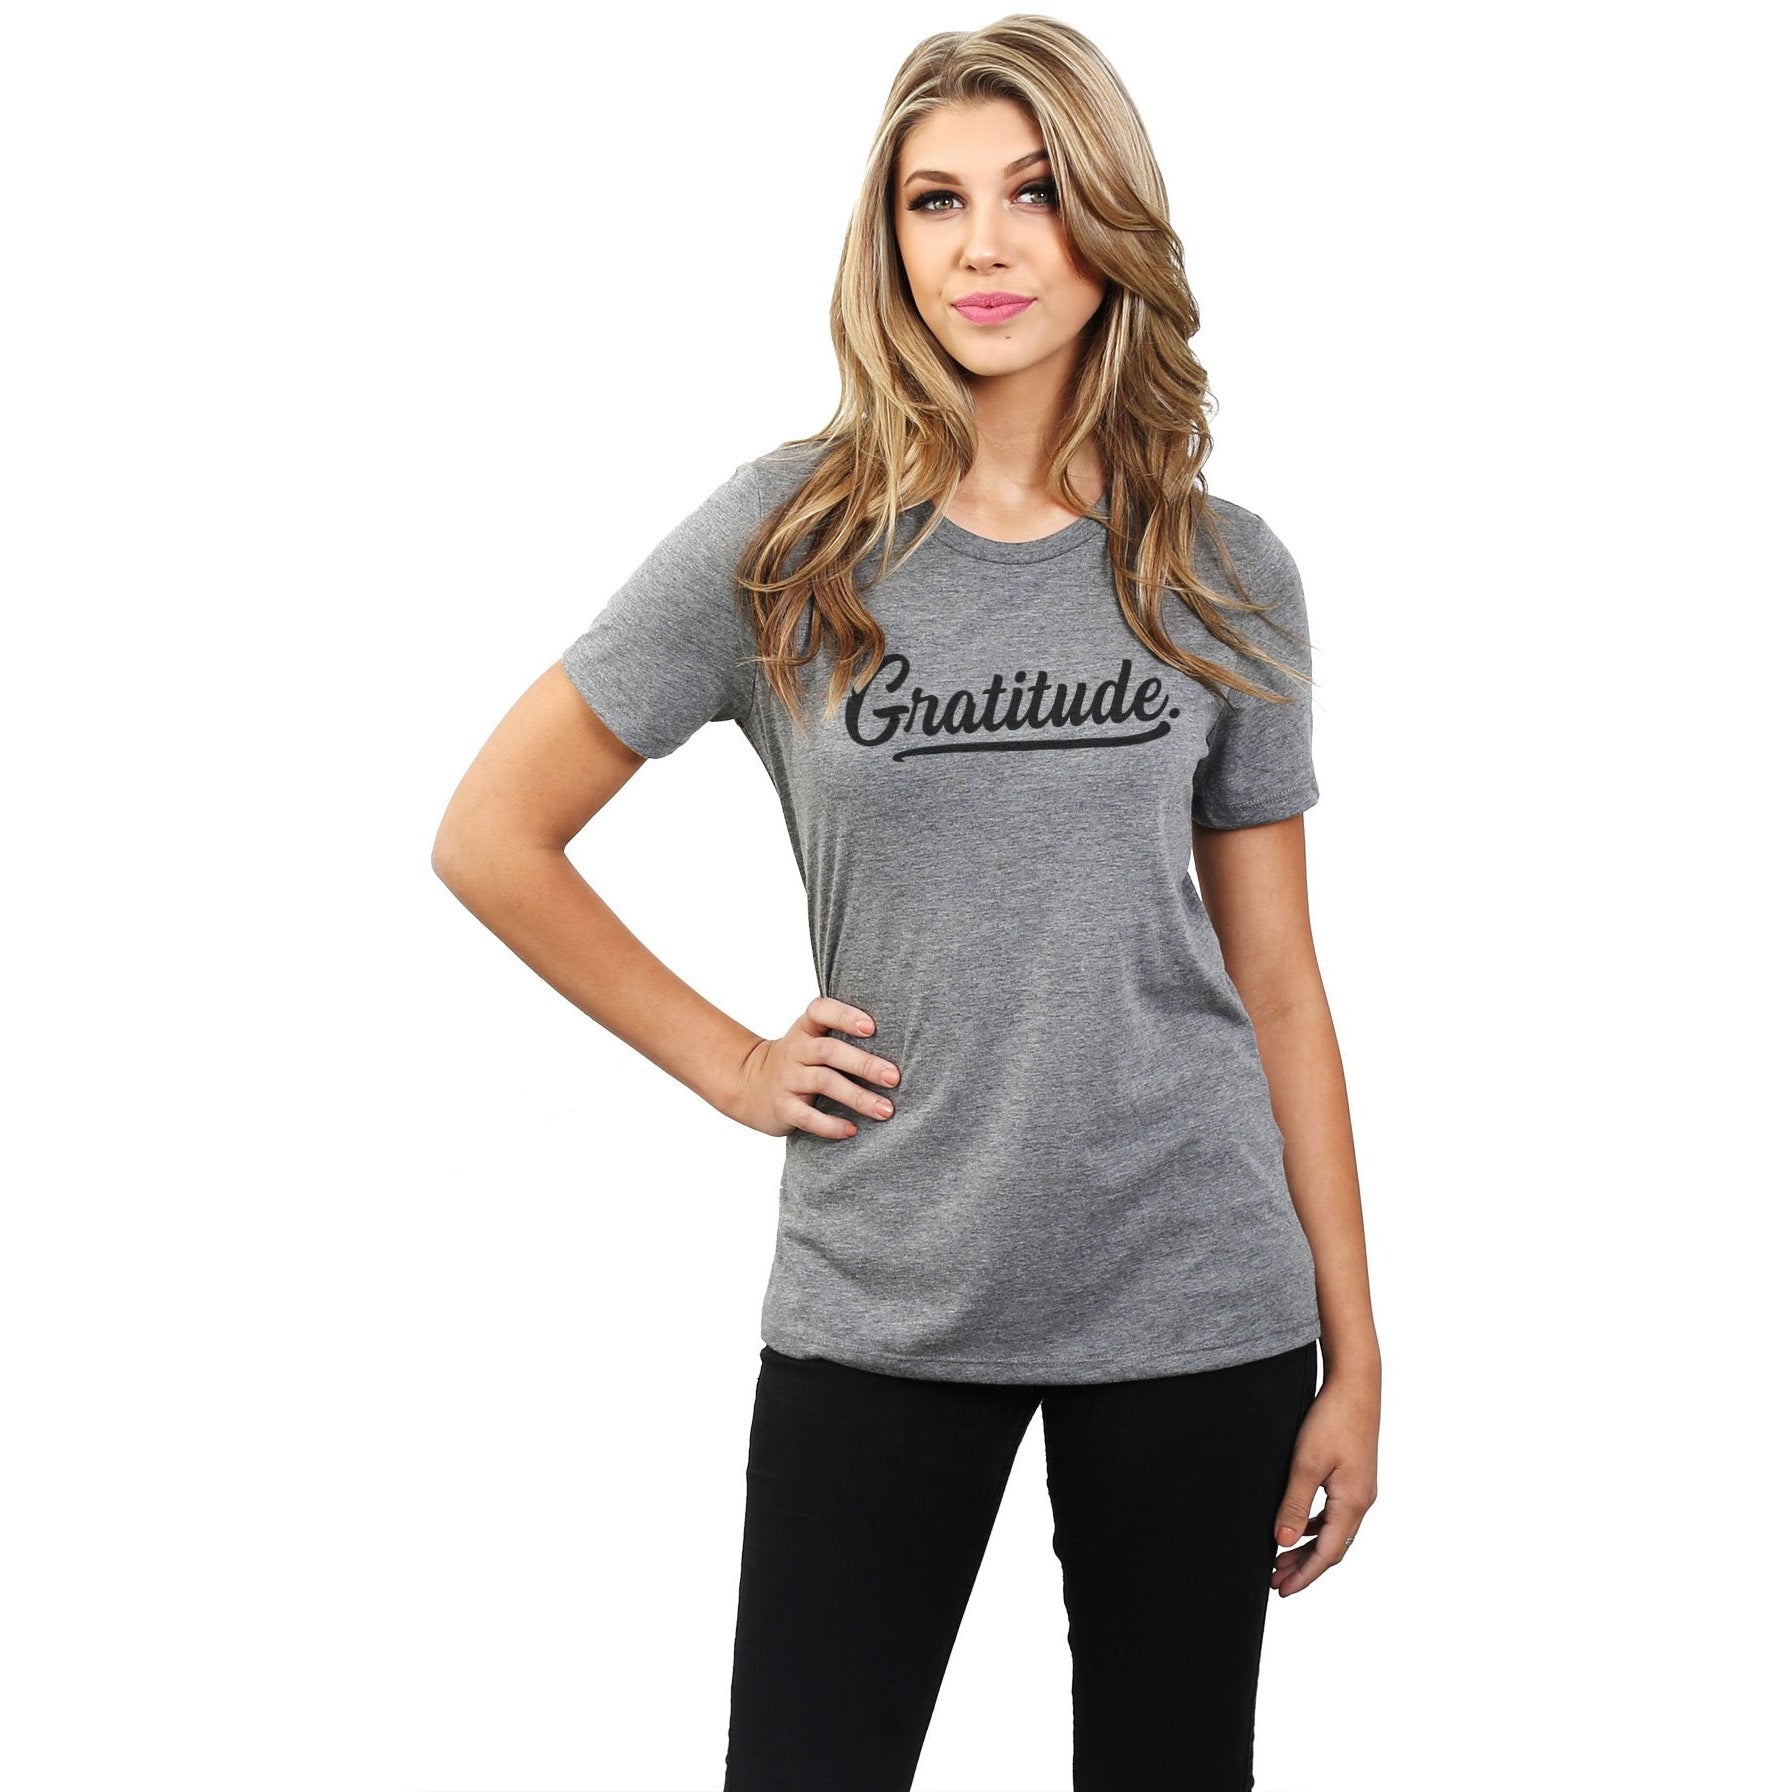 Gratitude Women's Relaxed Crewneck T-Shirt Top Tee Heather Grey Model
